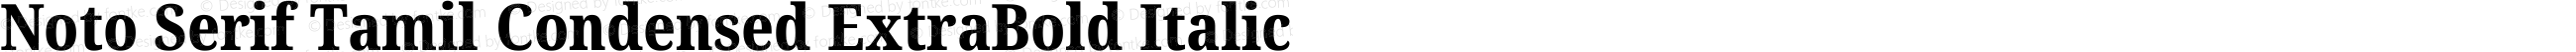 Noto Serif Tamil Condensed ExtraBold Italic